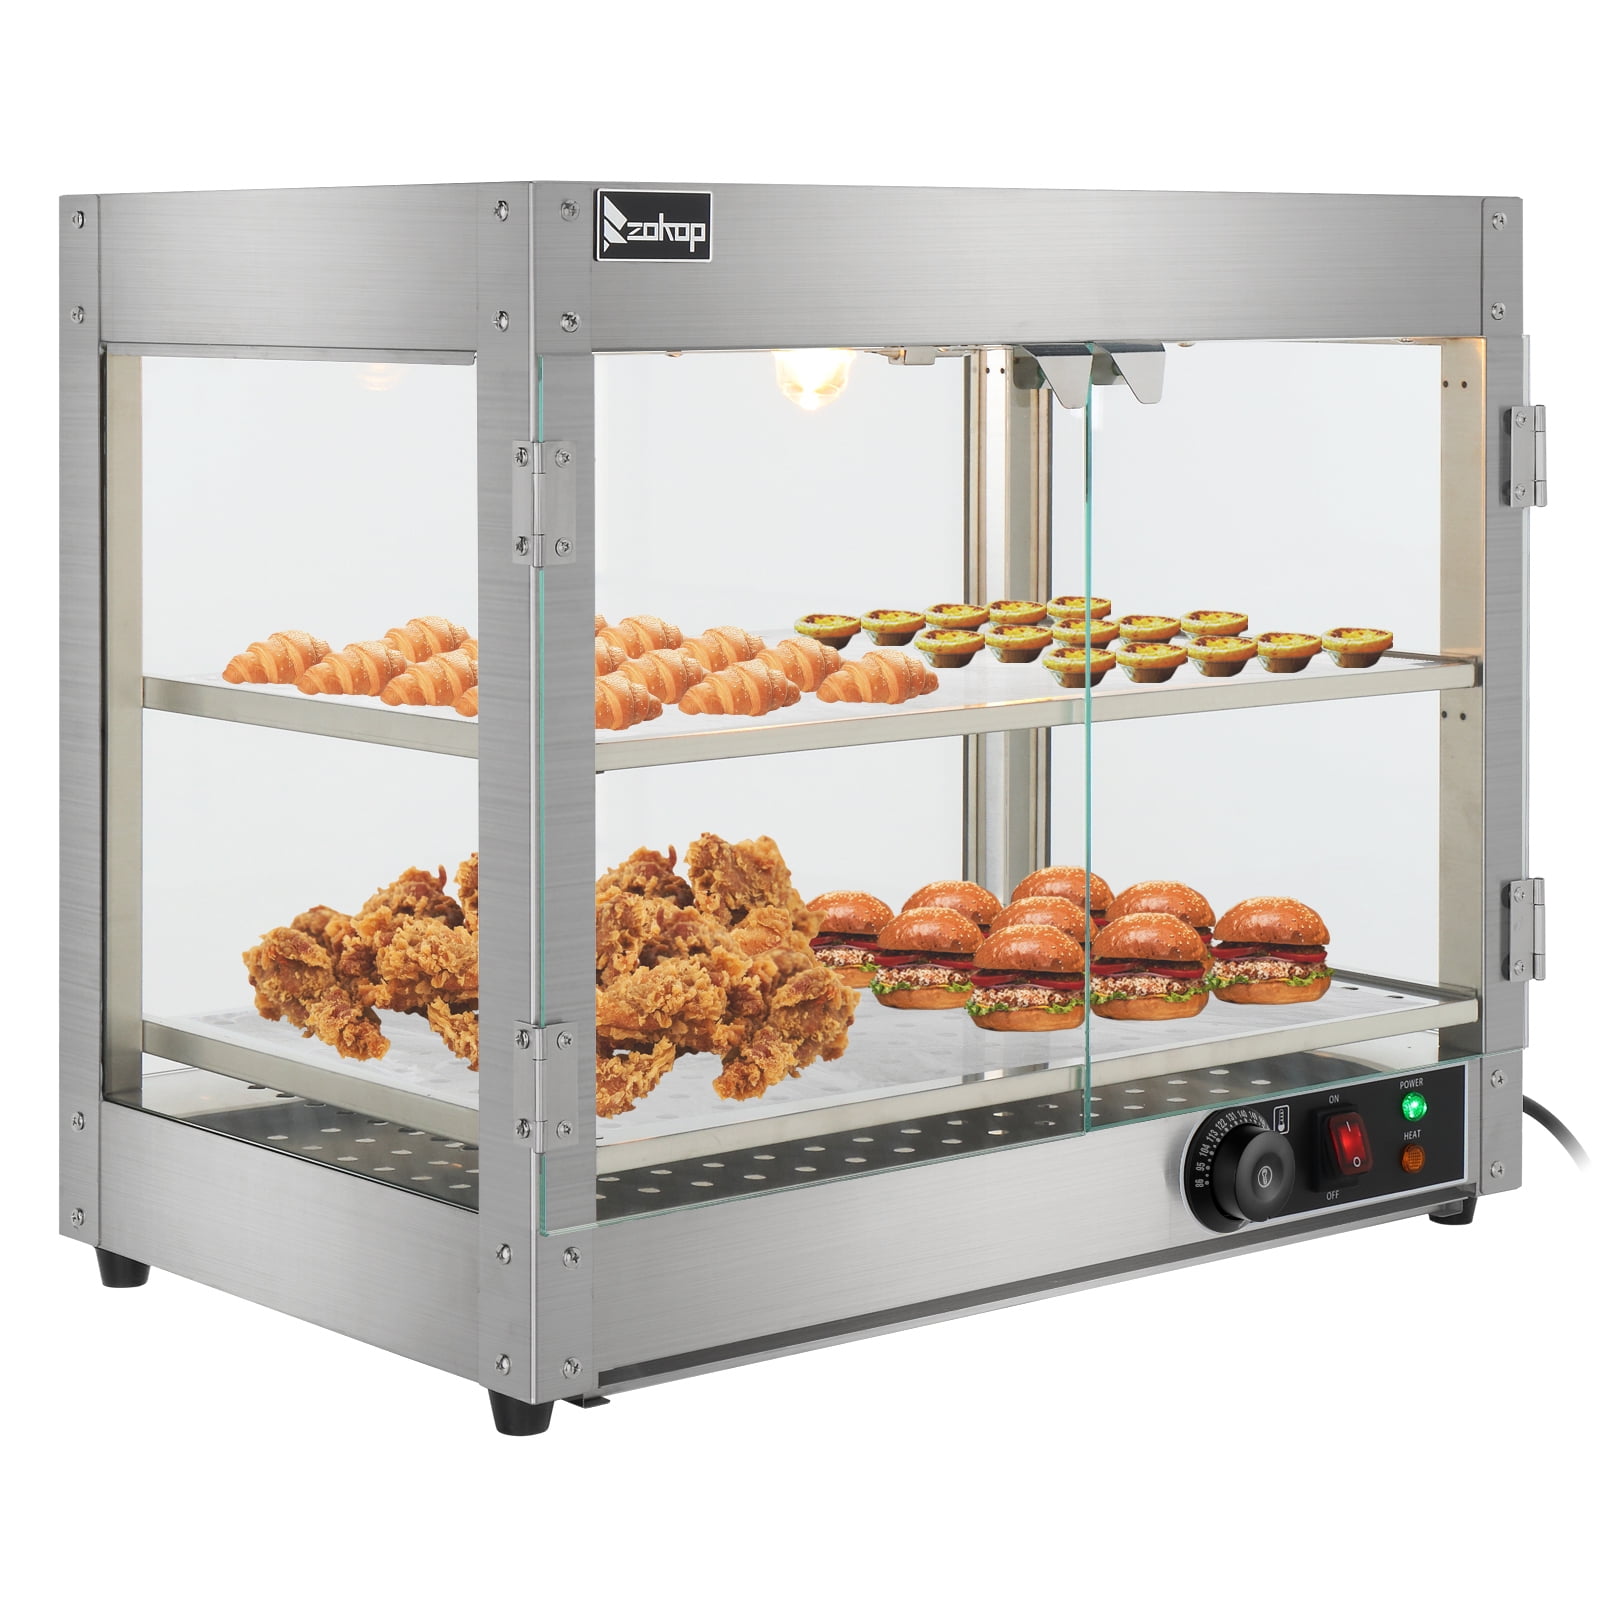 Koolmore 22 Commercial 2 Shelf Countertop Food Warmer Display Case - 1.5. Cu ft. HDC-1.5C